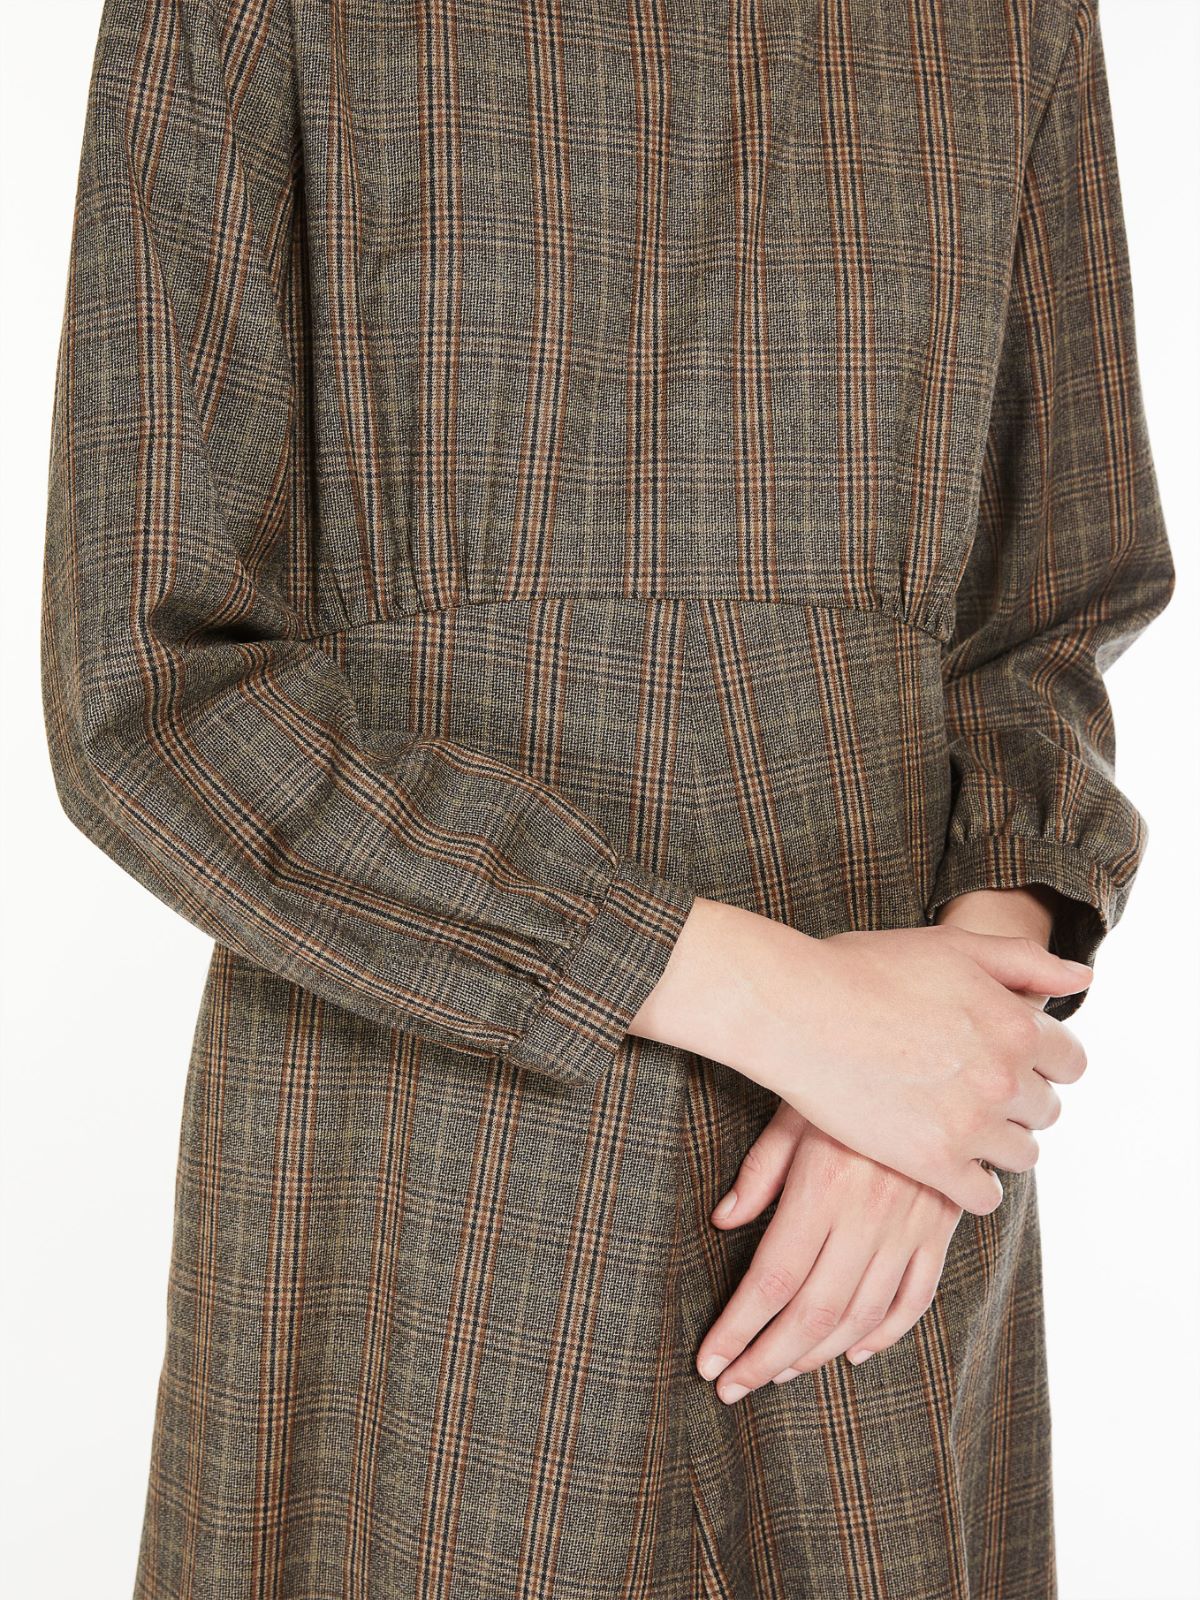 Wool flannel dress - CAMEL - Weekend Max Mara - 4